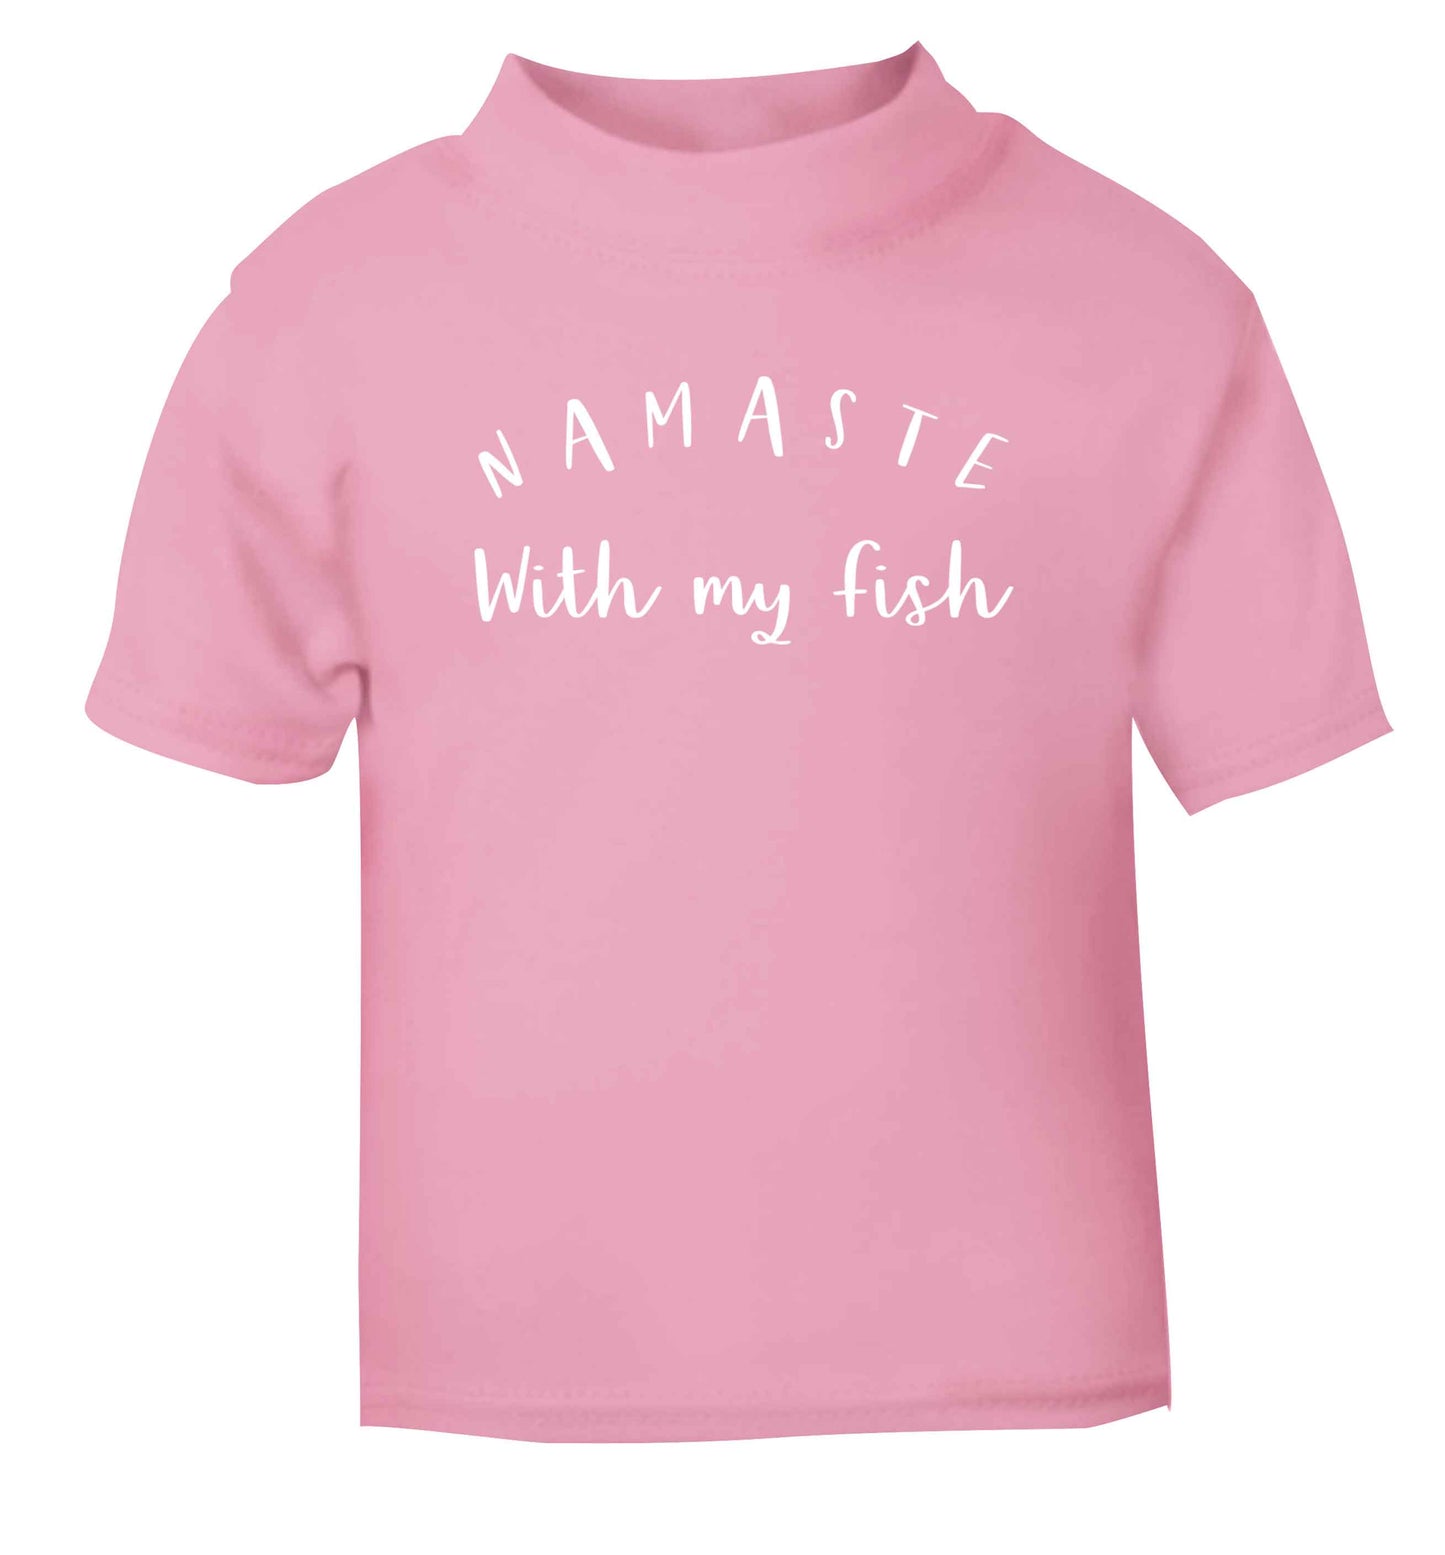 Namaste with my fish light pink Baby Toddler Tshirt 2 Years